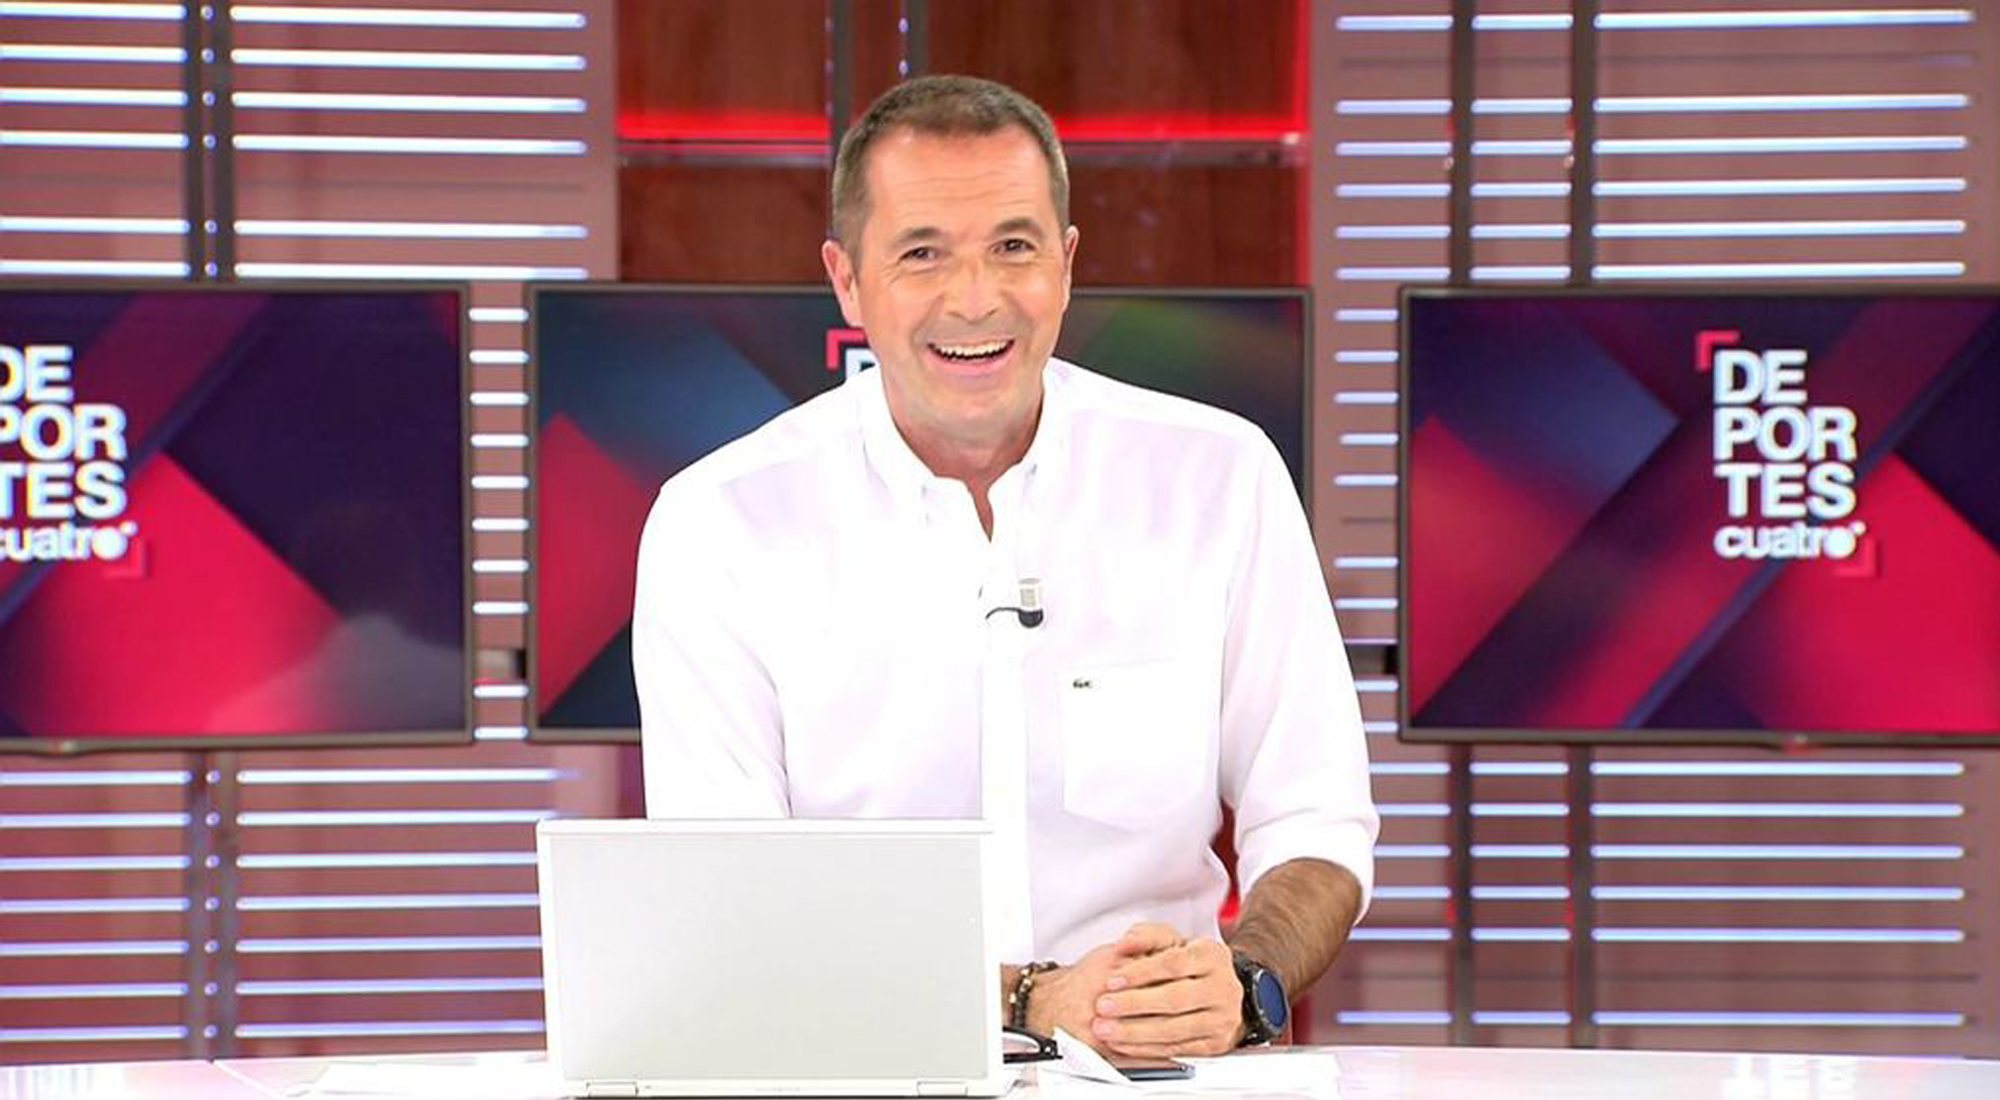 Manu Carreño, presentador de 'Deportes Cuatro'